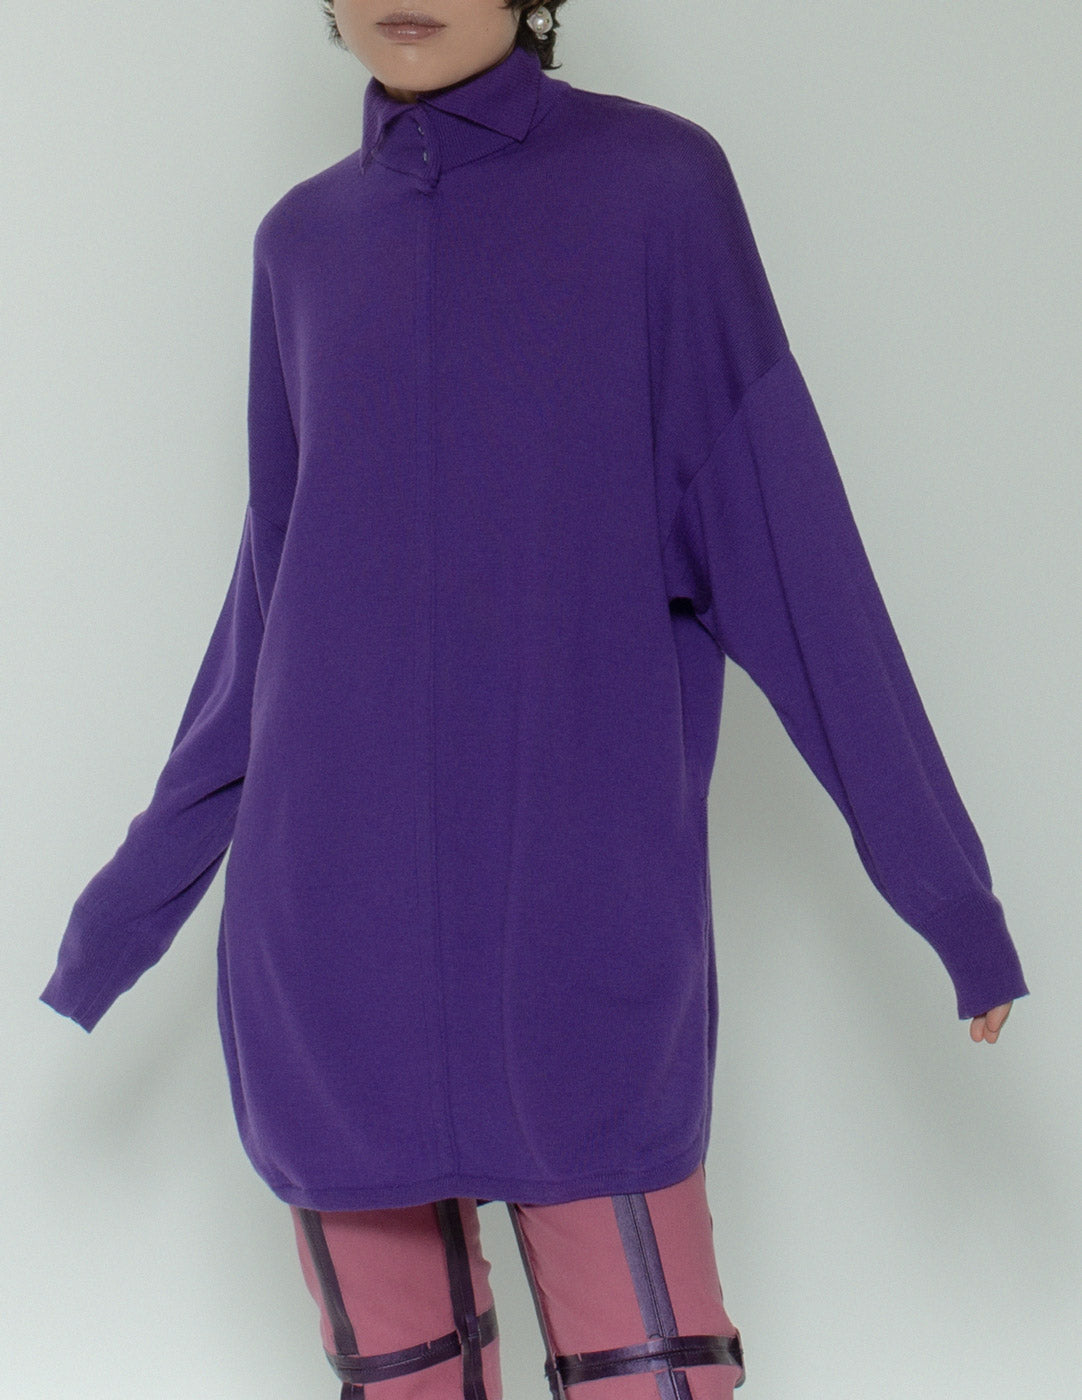 Gianni Versace vintage purple wool sweater